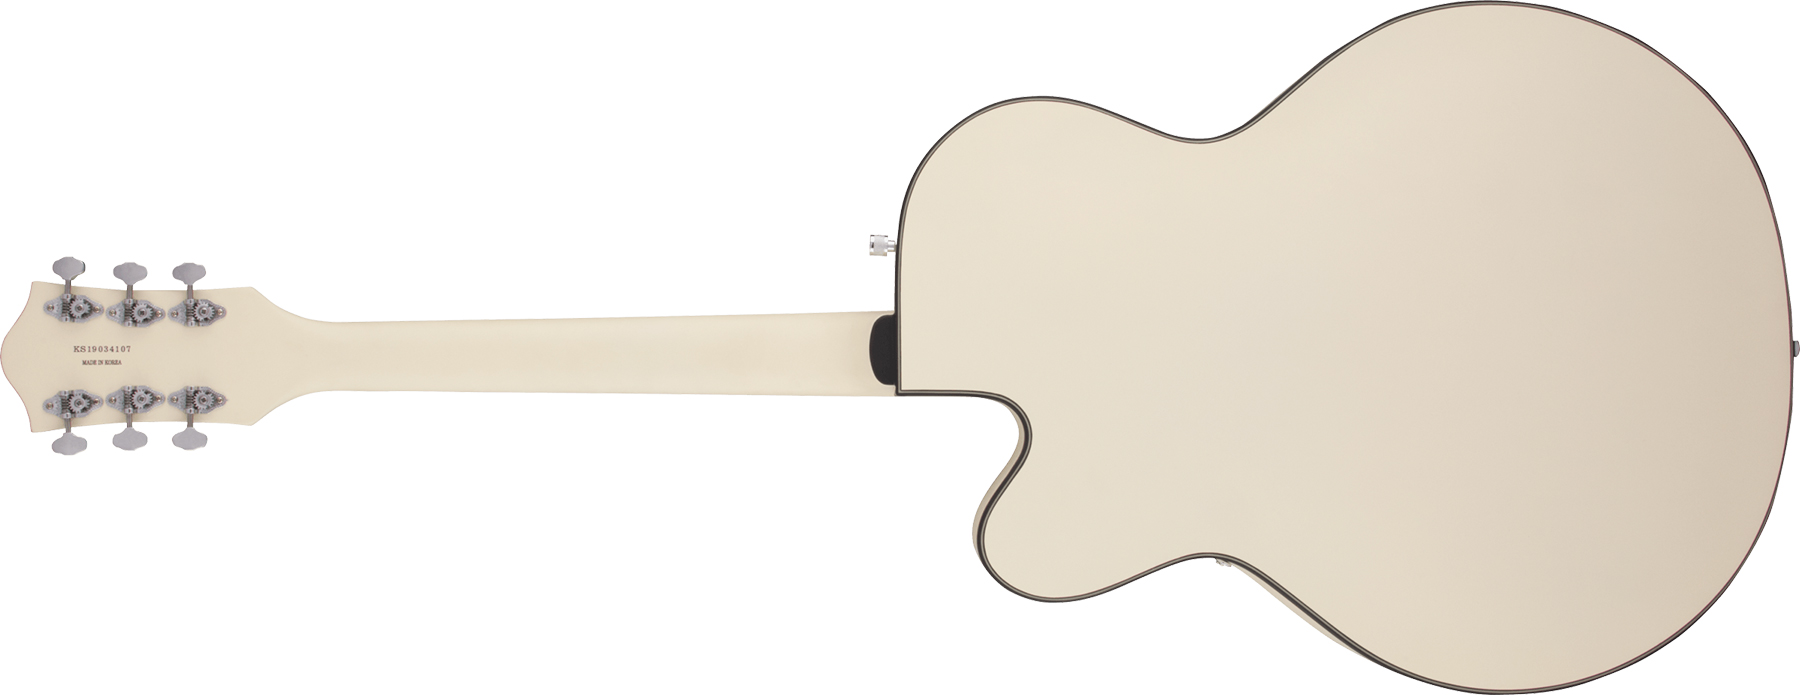 Gretsch G5410t Rat Rod Bigsby Electromatic Hollow Body 2h Trem Rw - Matte Vintage White - Semi-hollow electric guitar - Variation 2